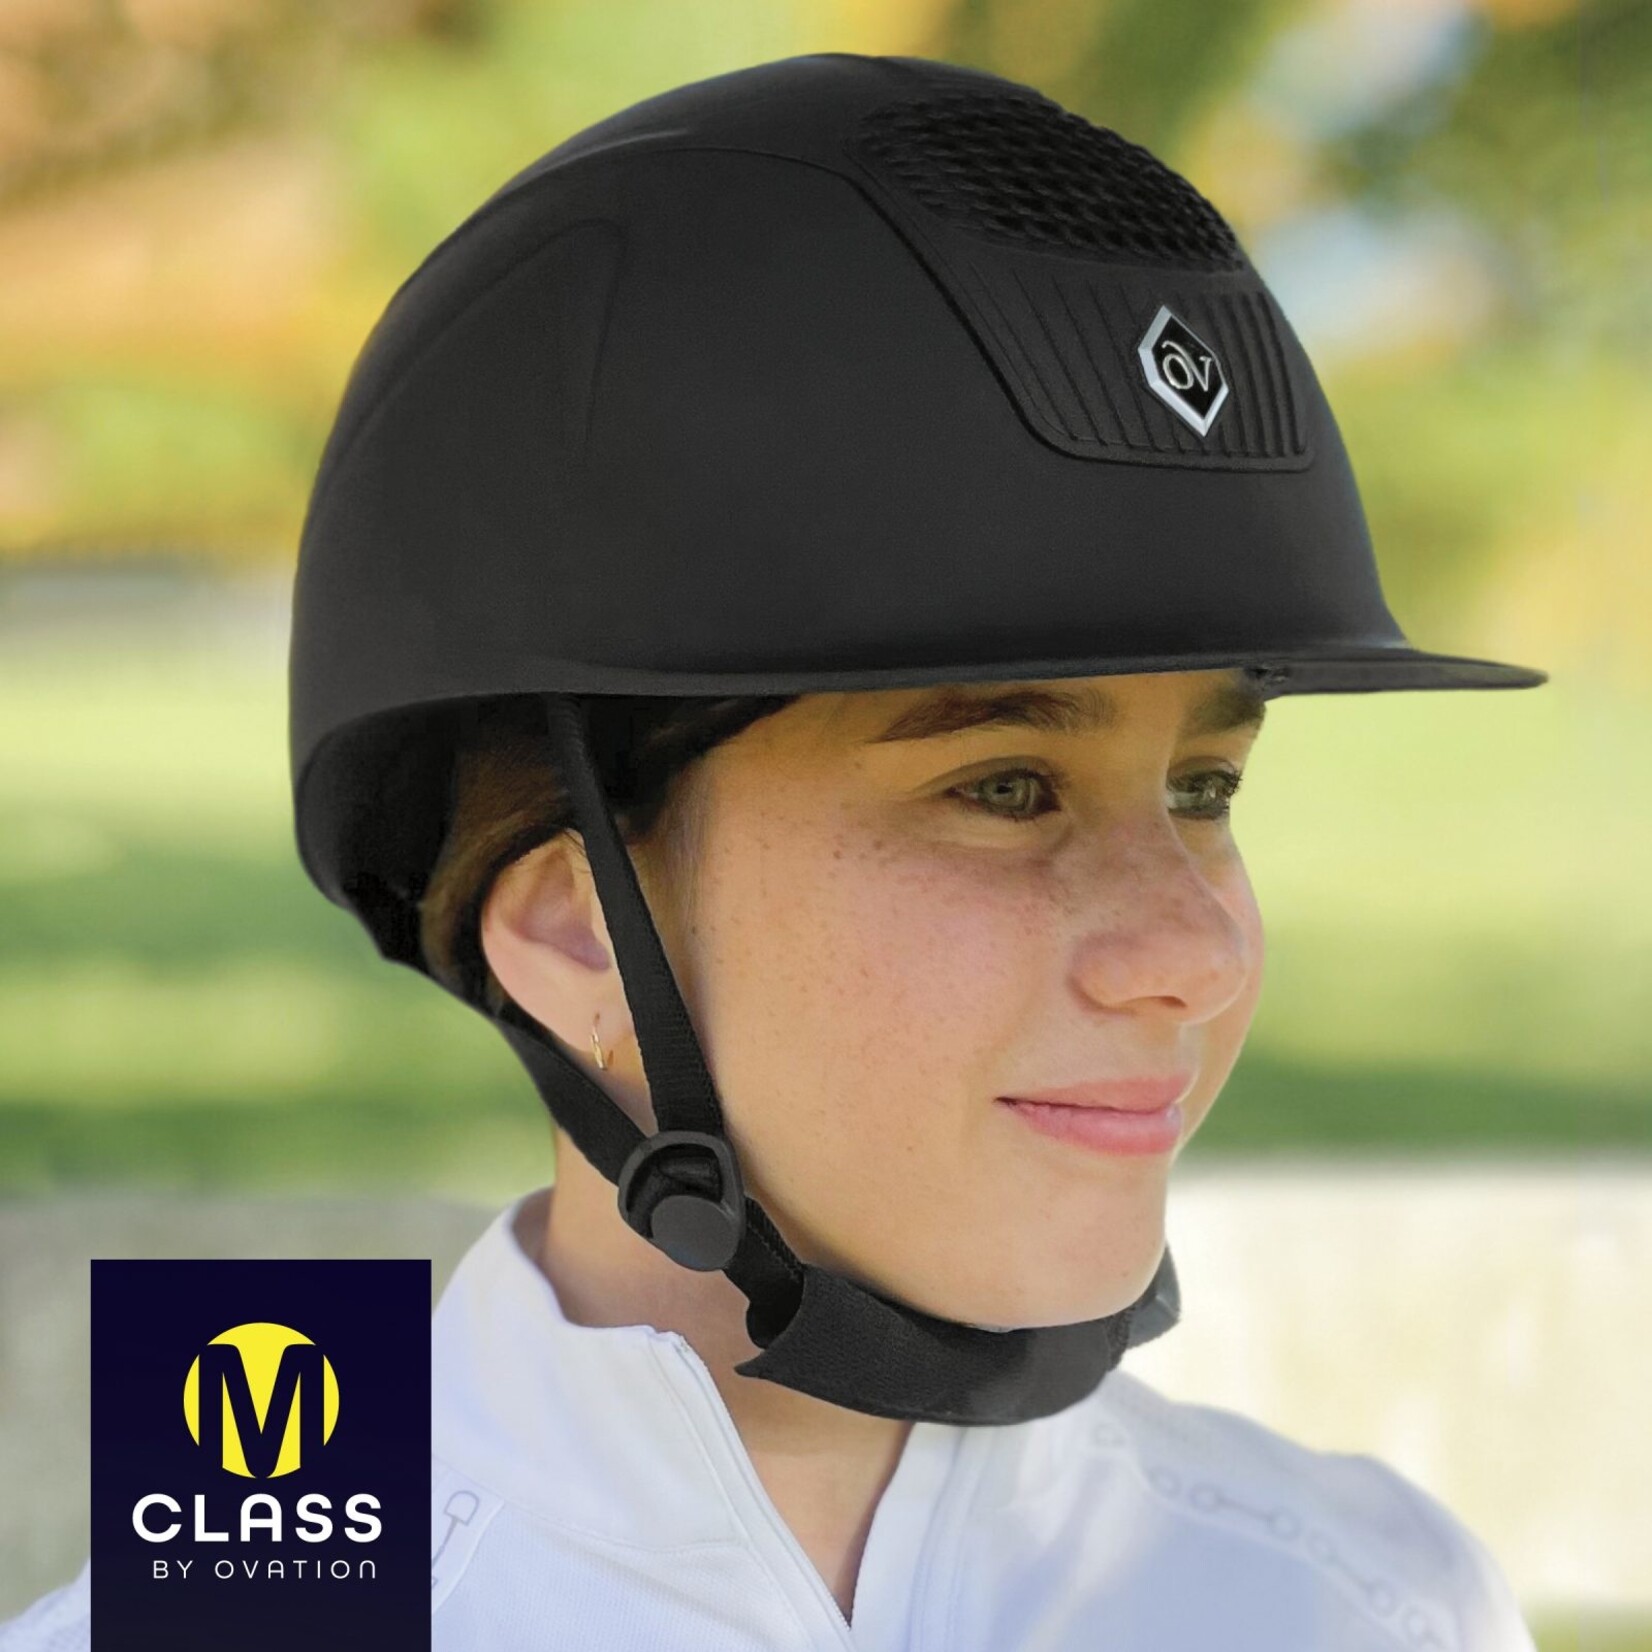 Ovation OV M Class MIPS Helmet